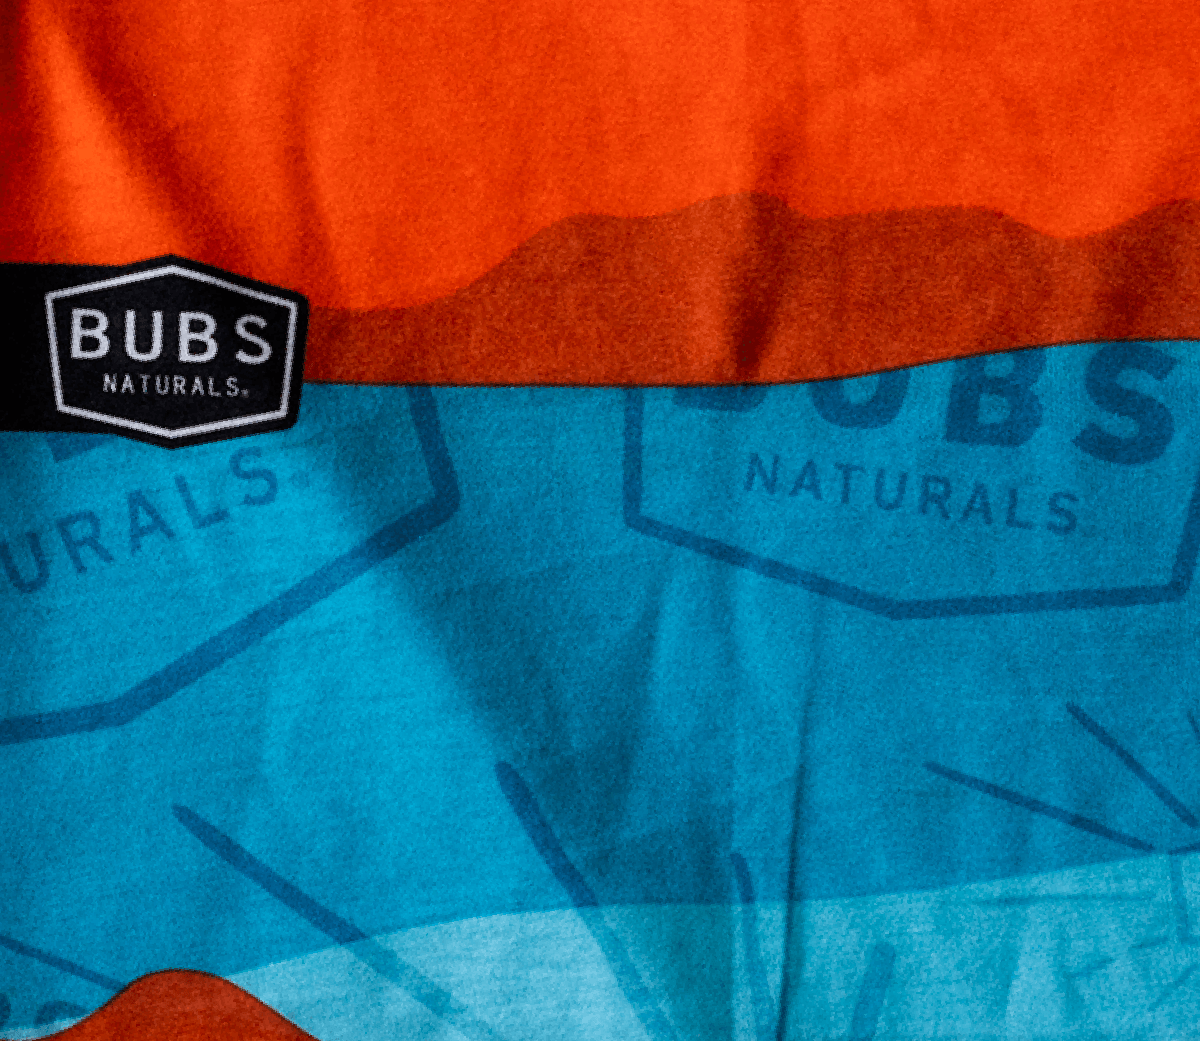 BUBS Neck Gaiter Blue/Orange BUBS Naturals